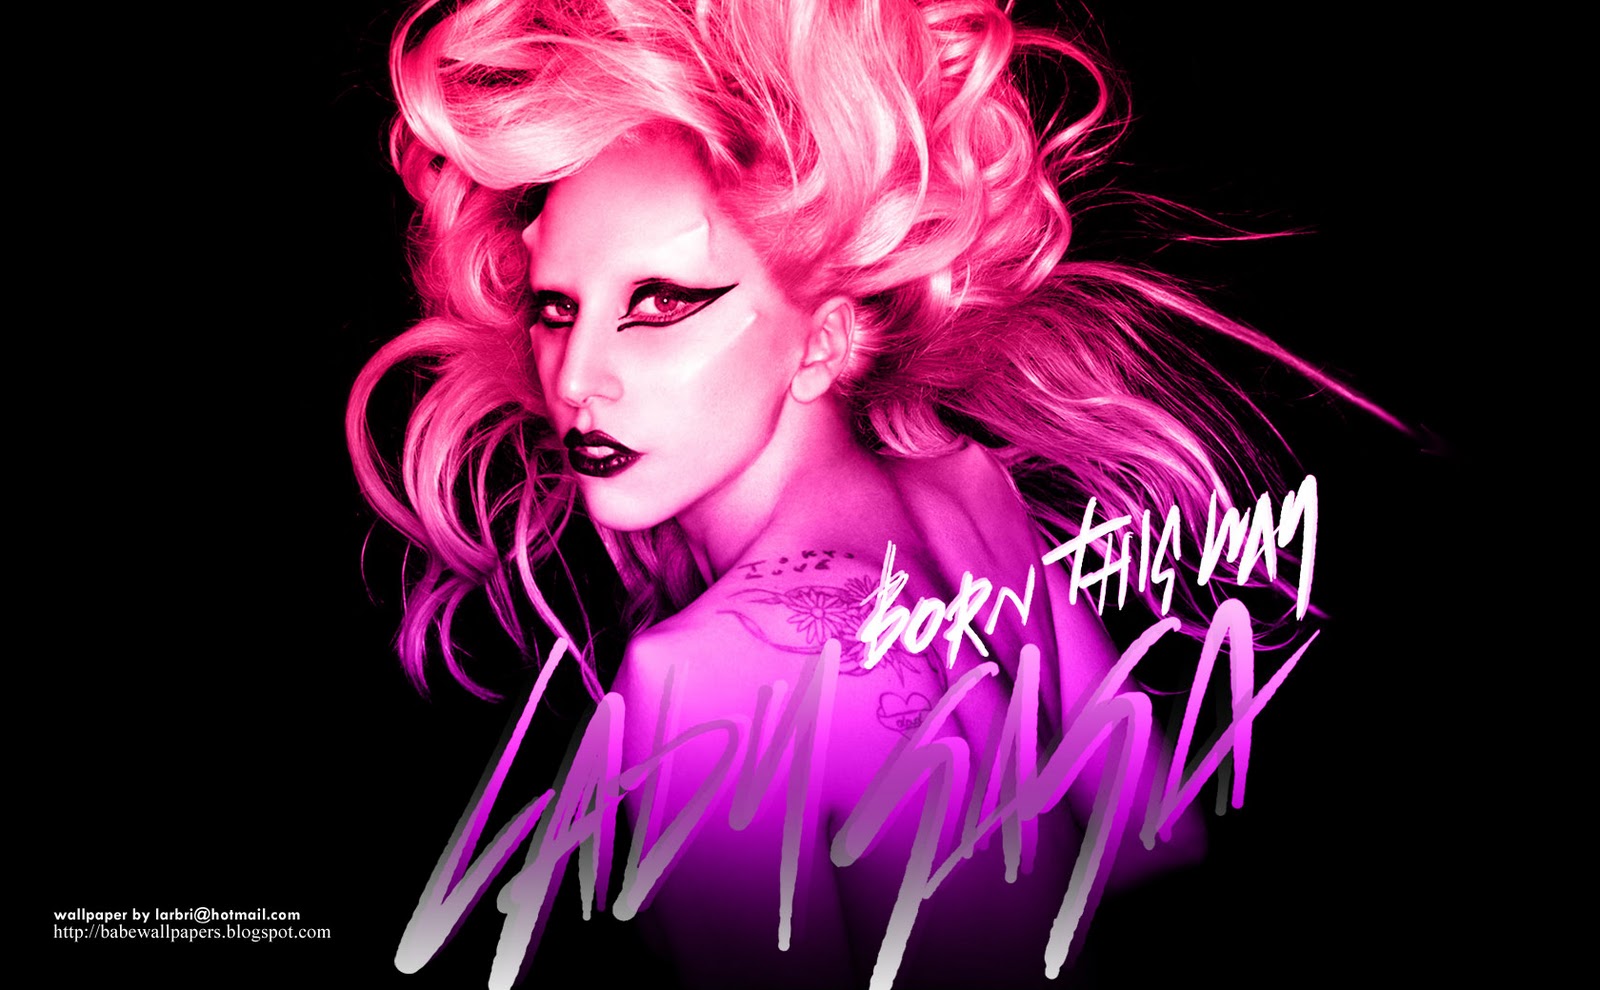 Lady gaga remember us this way перевод. Lady Gaga "born this way". Born this way обои. Lady Gaga born this way Wallpaper. Radio Gaga Lady Gaga.